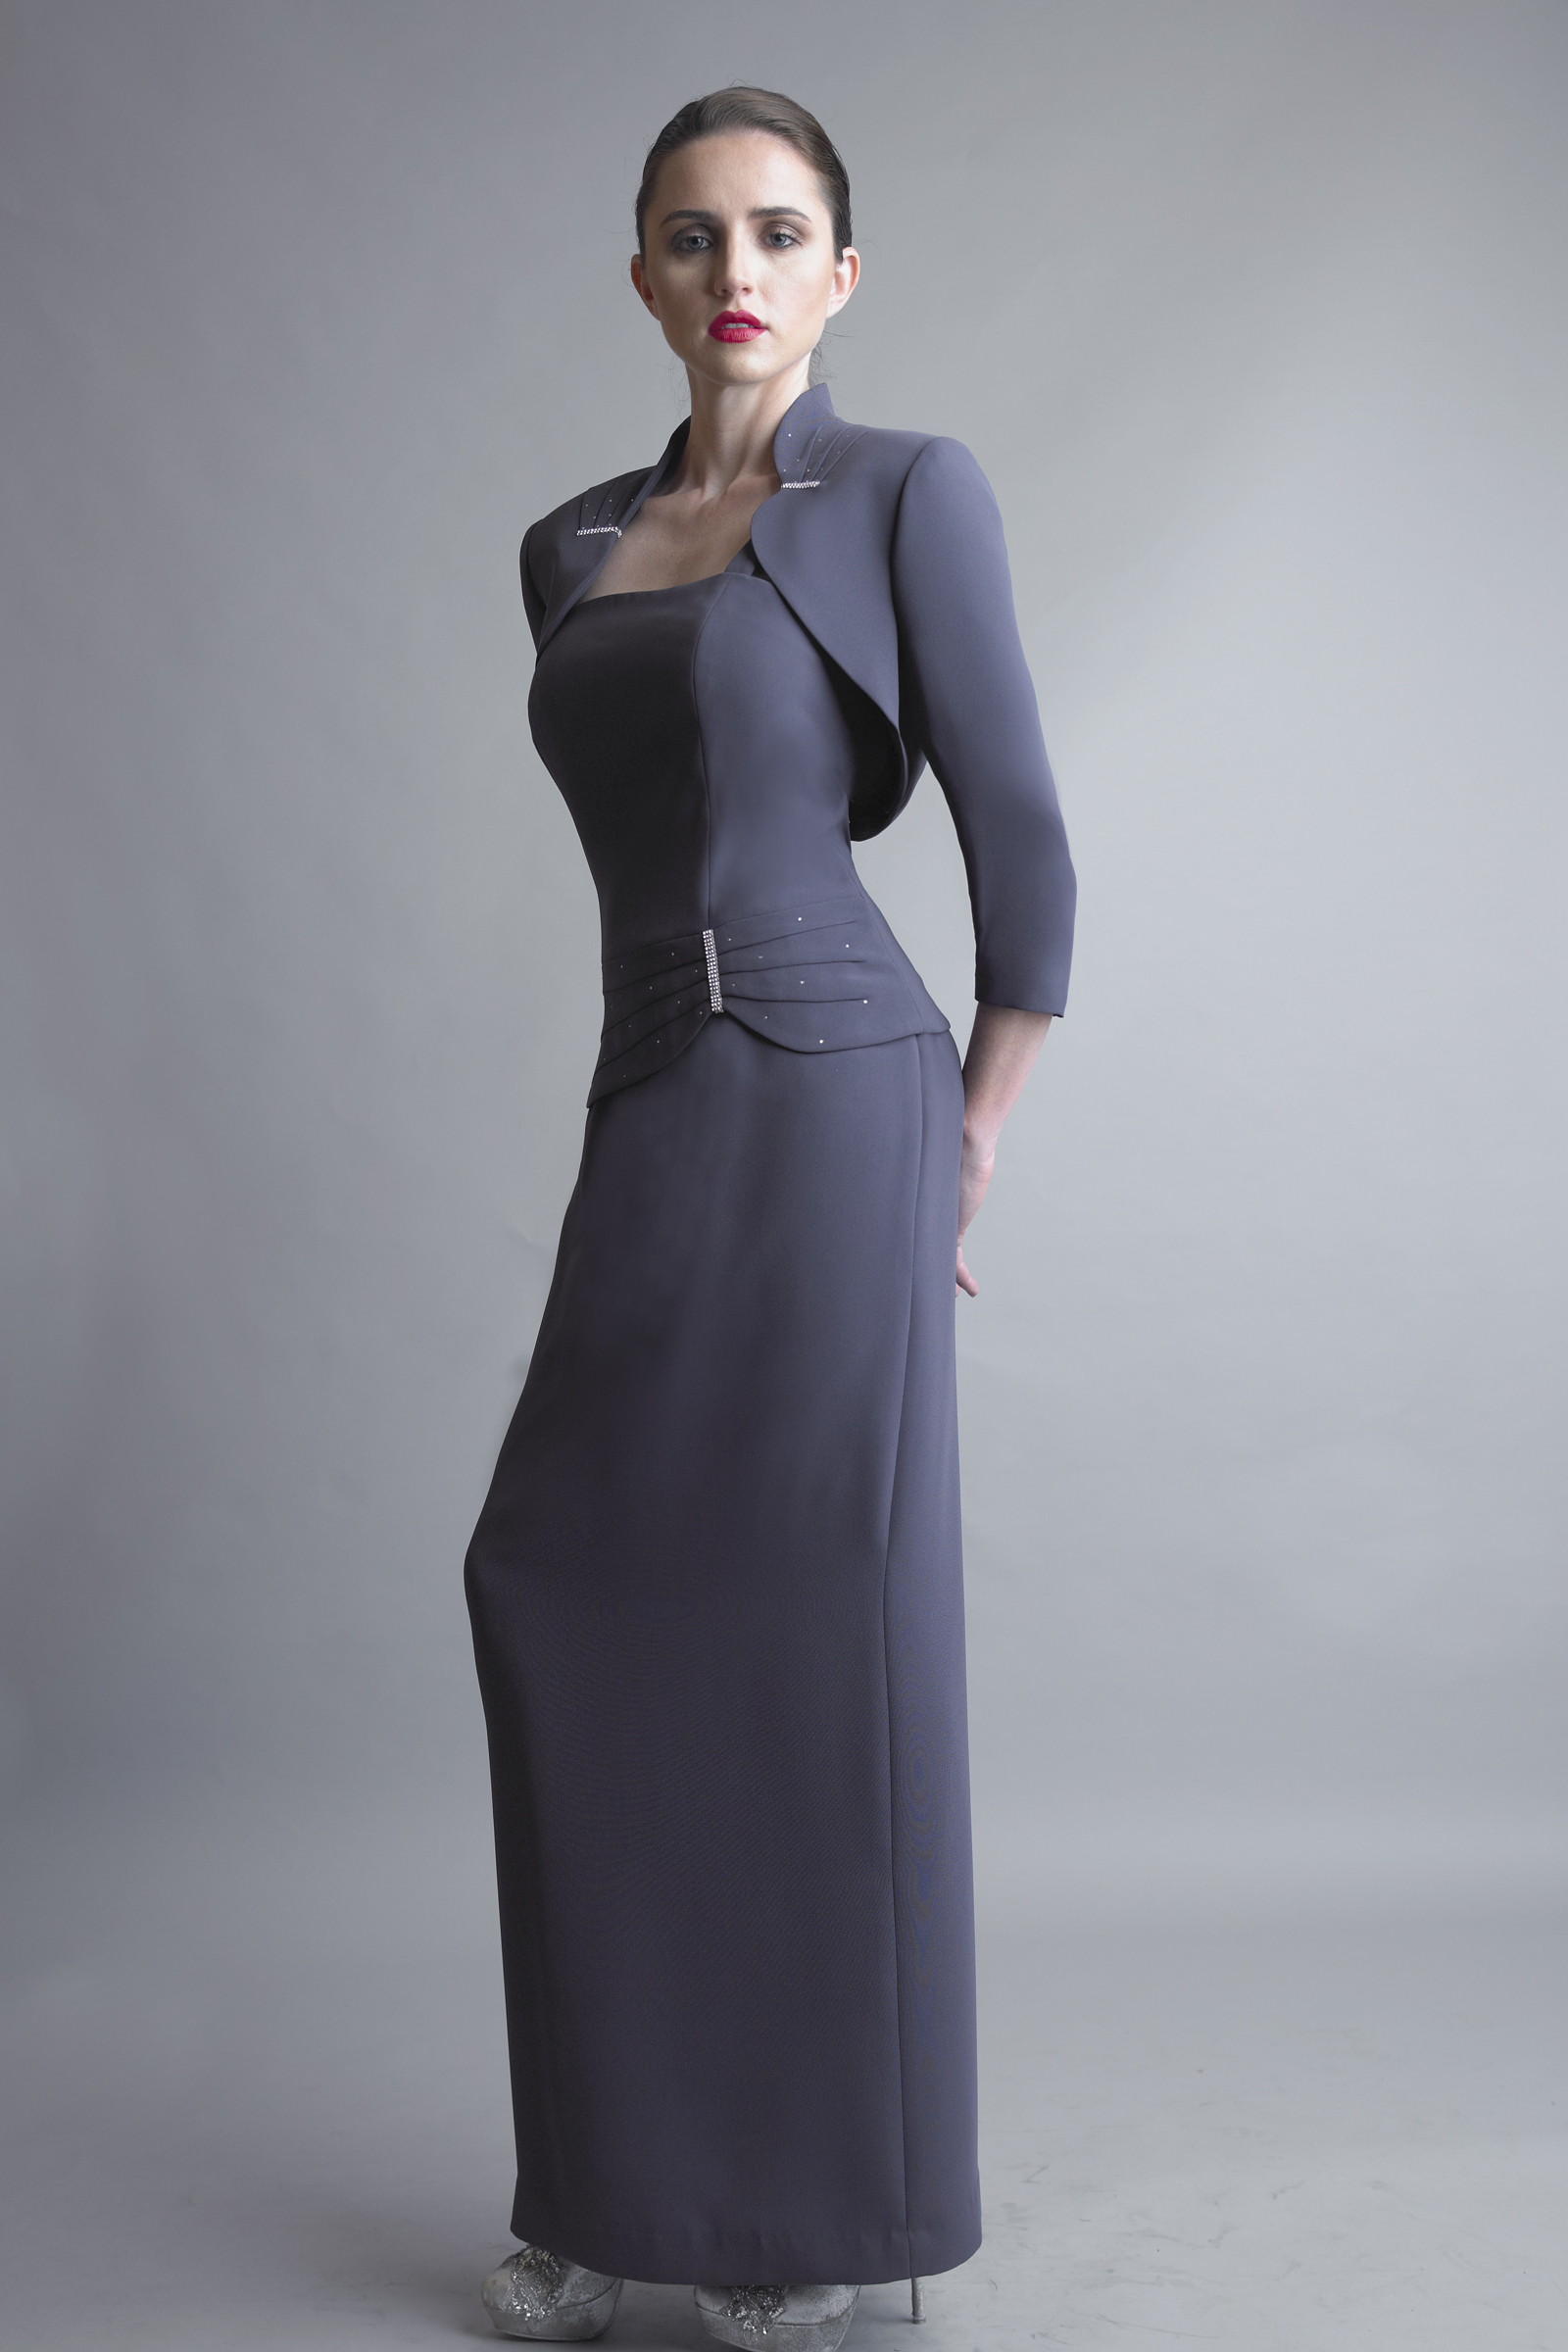 Junnie Leigh Formal Wear - The Francis ShoppeThe Francis Shoppe